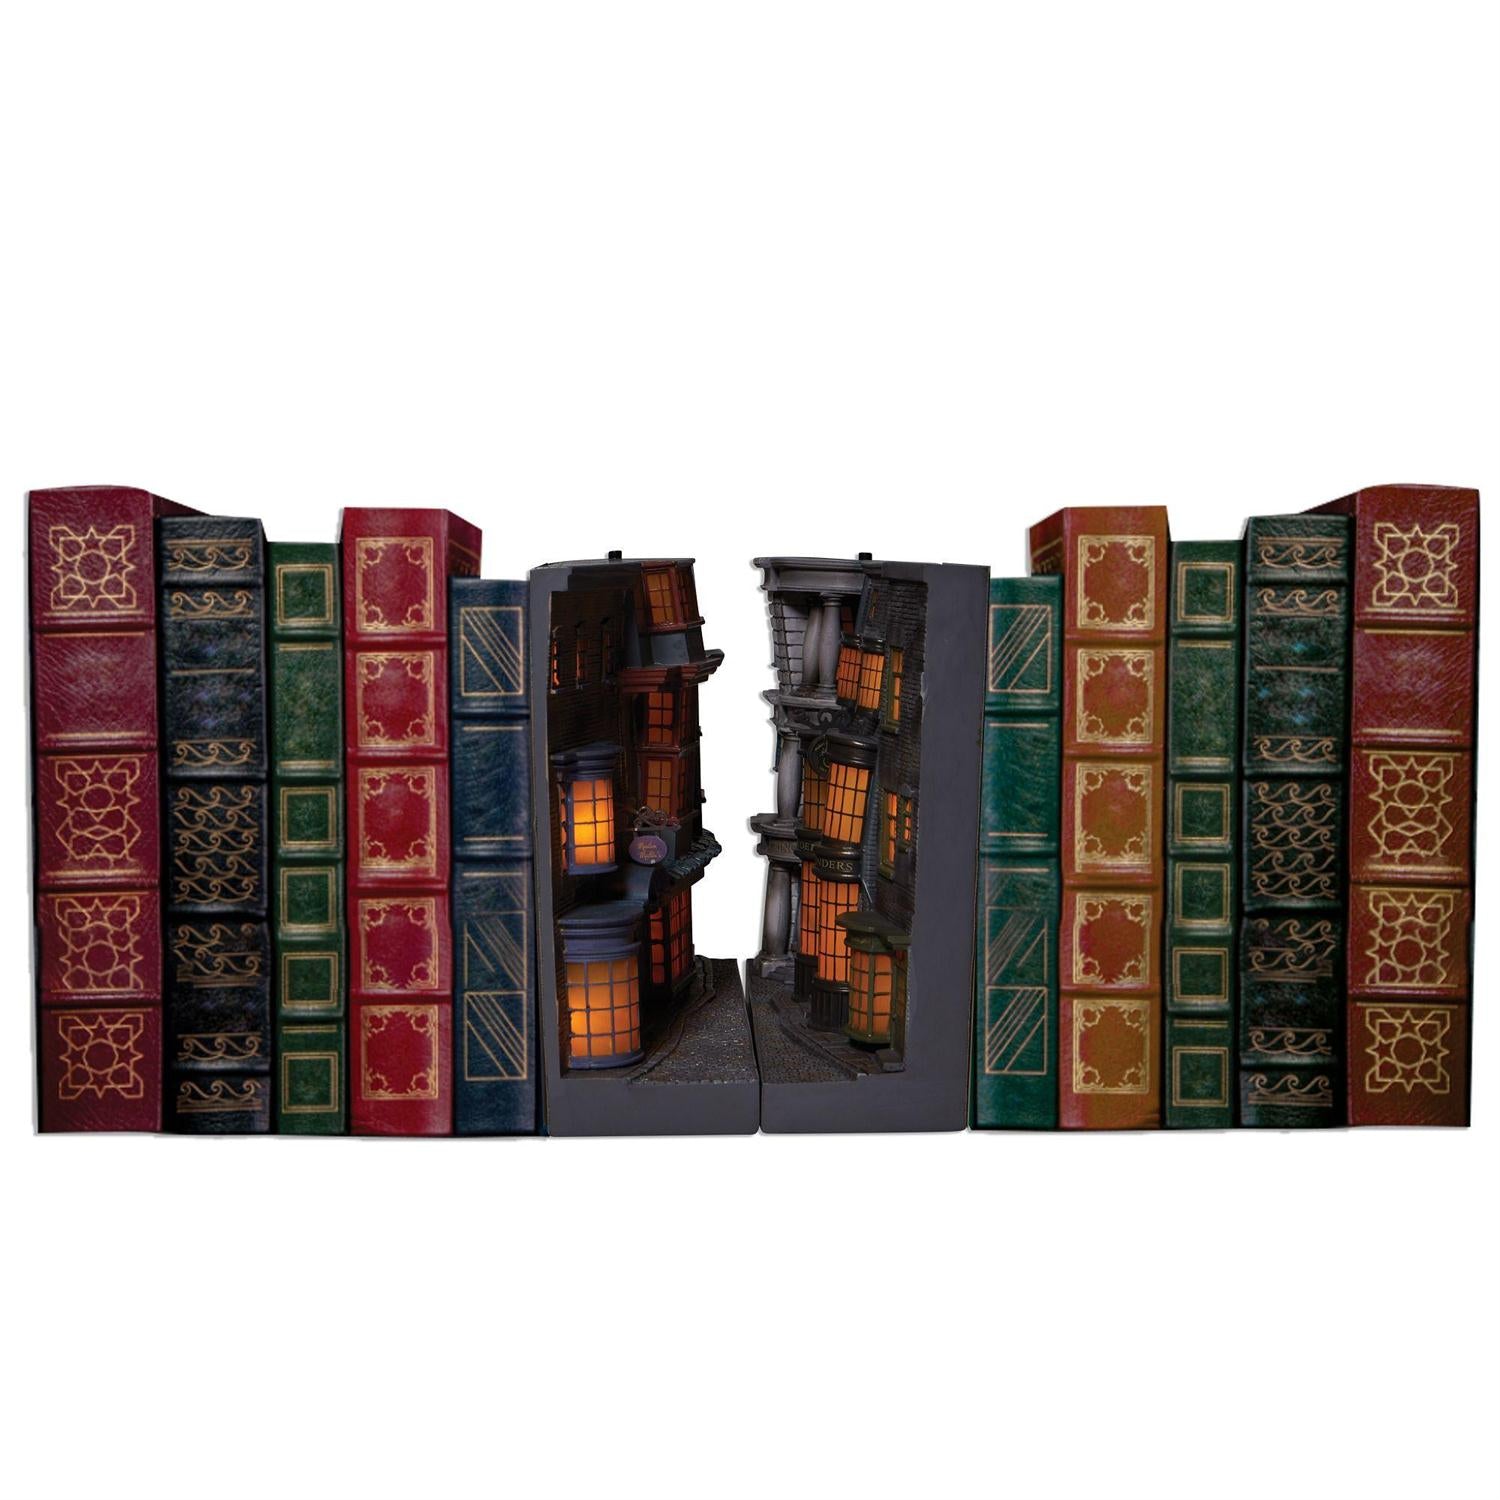 Decorative books - Bookends